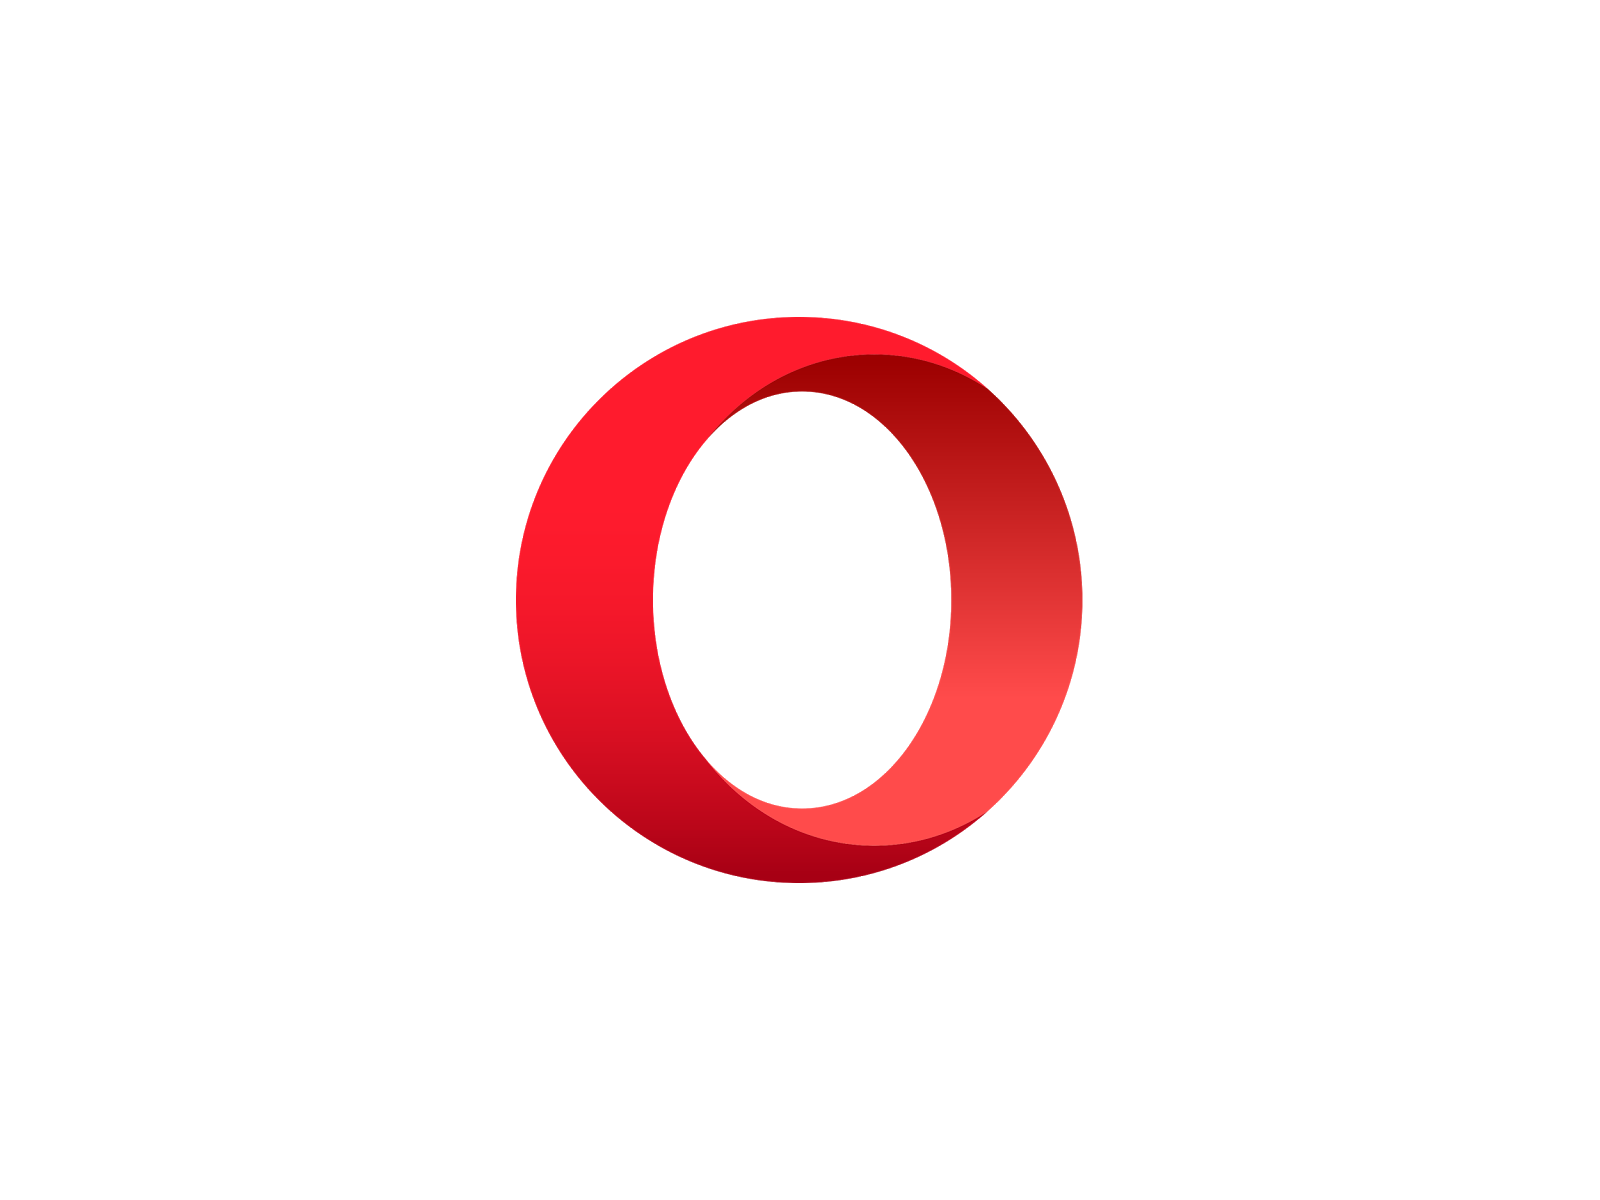 Opera Logos - Opera Brand